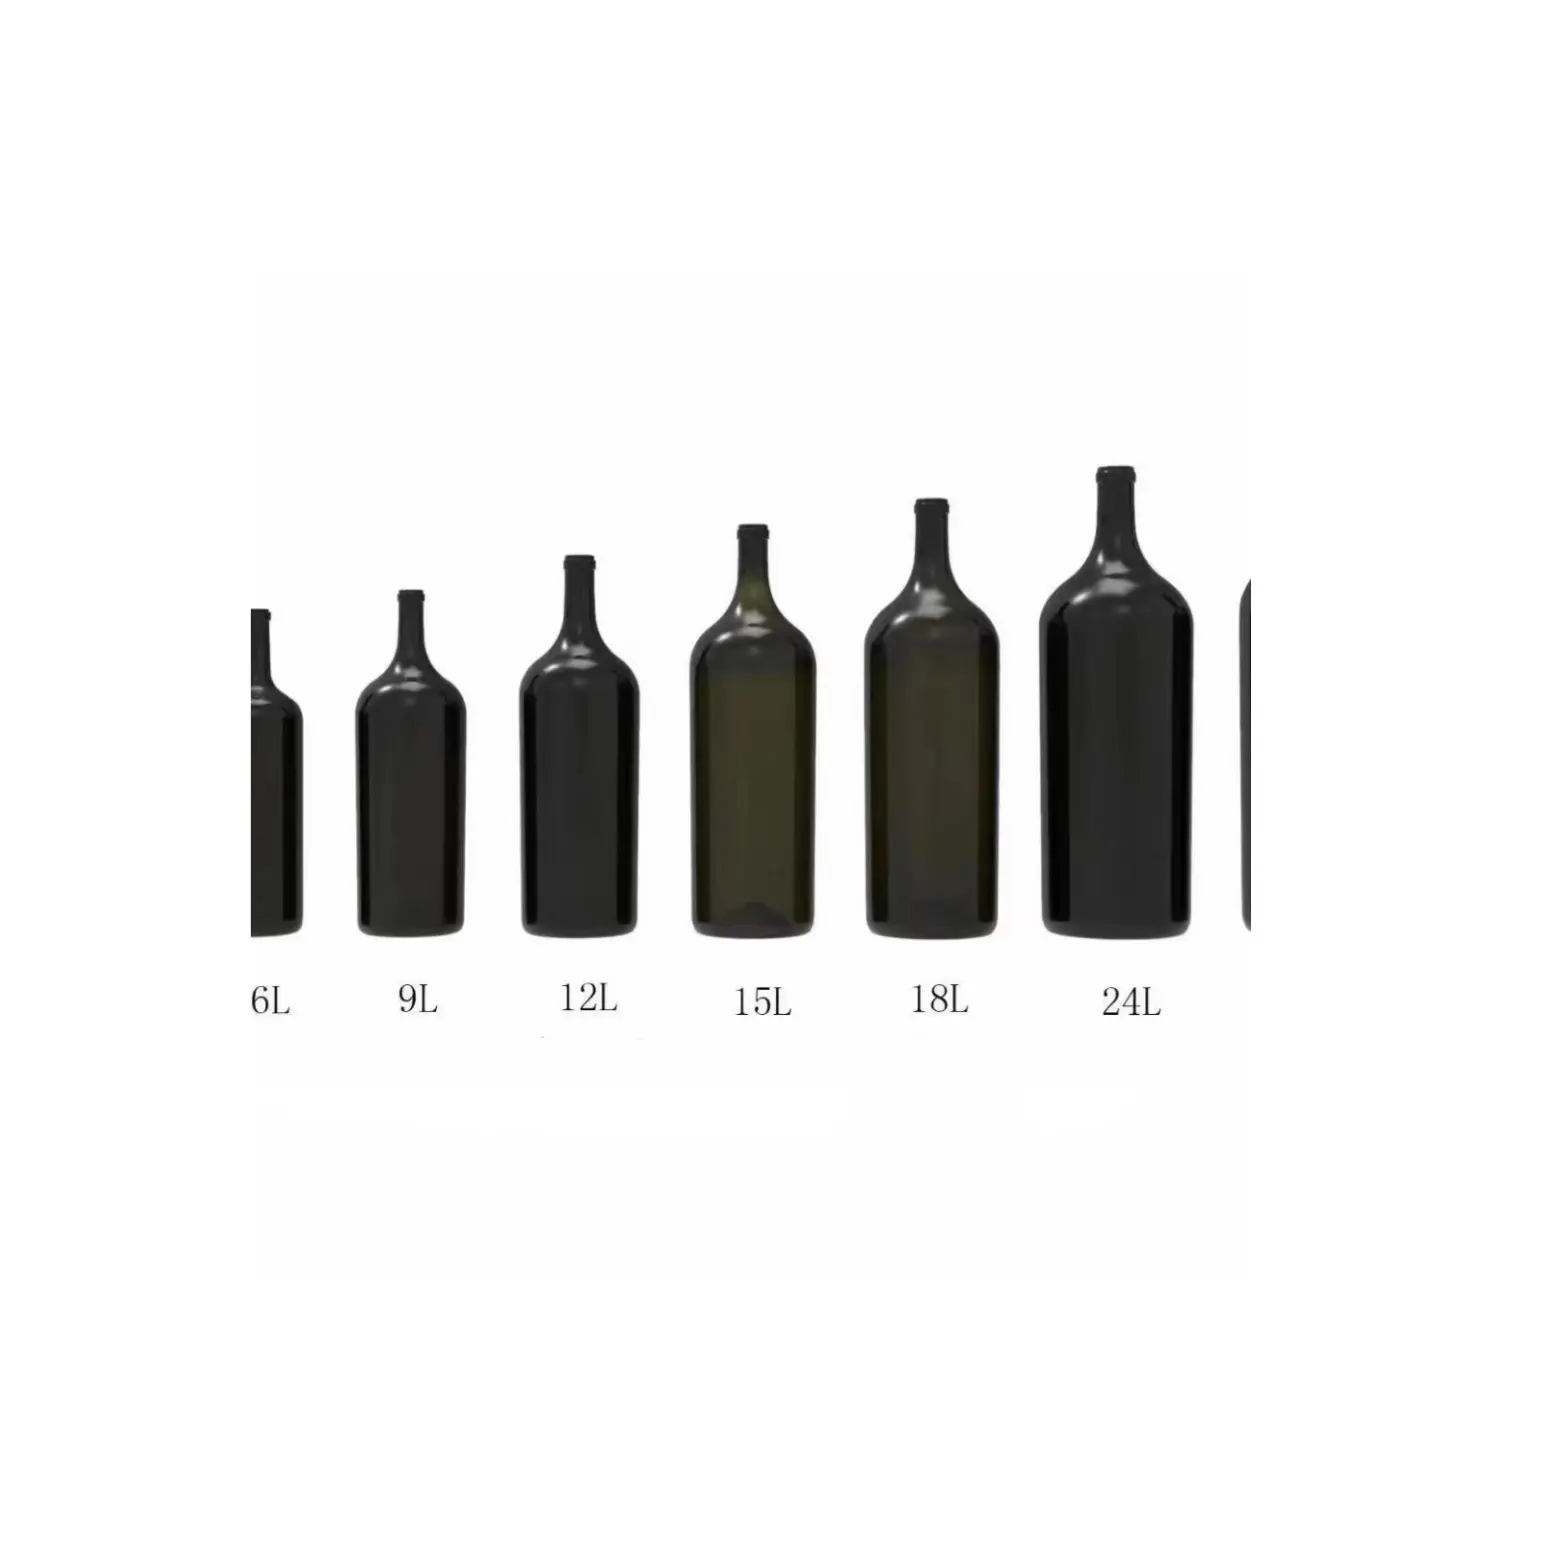 Custom Large Size whisky brandy vodka glass wine bottles In Good Price